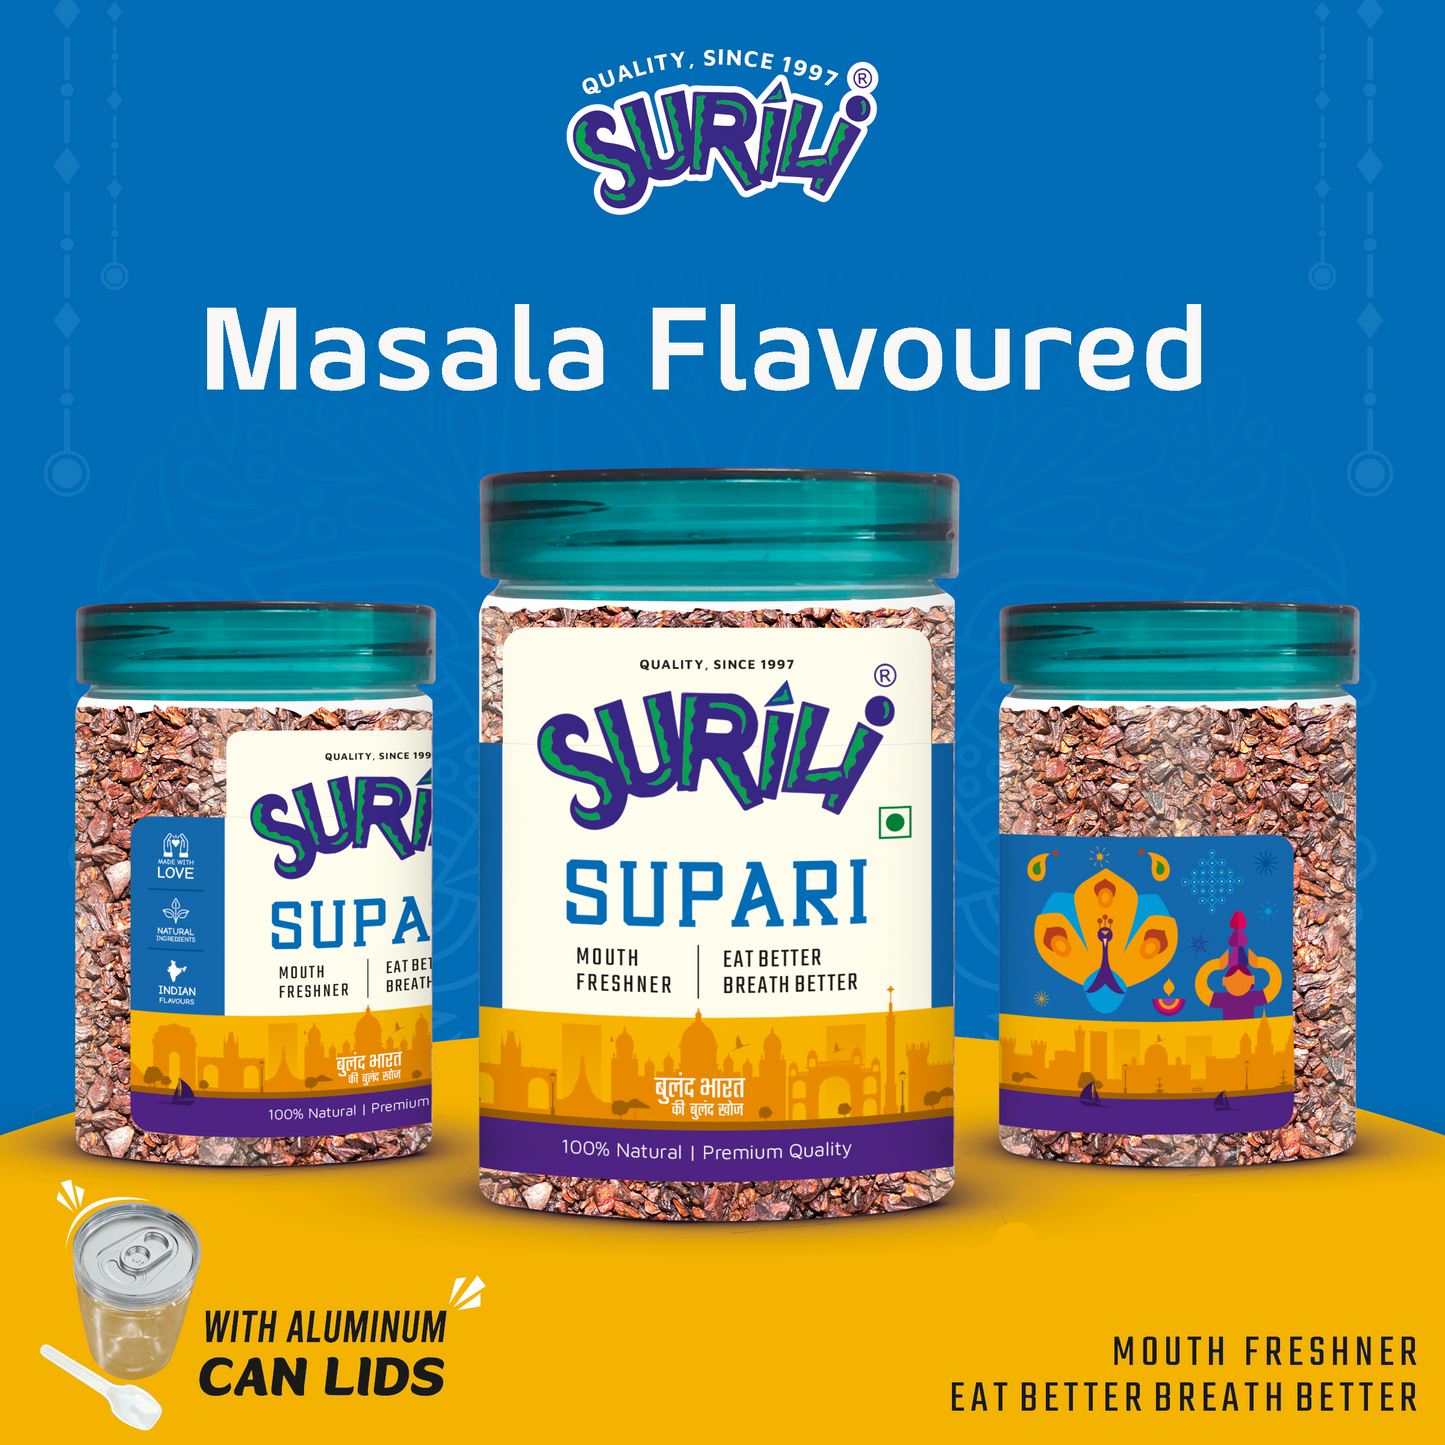 Masala Flavored Supari